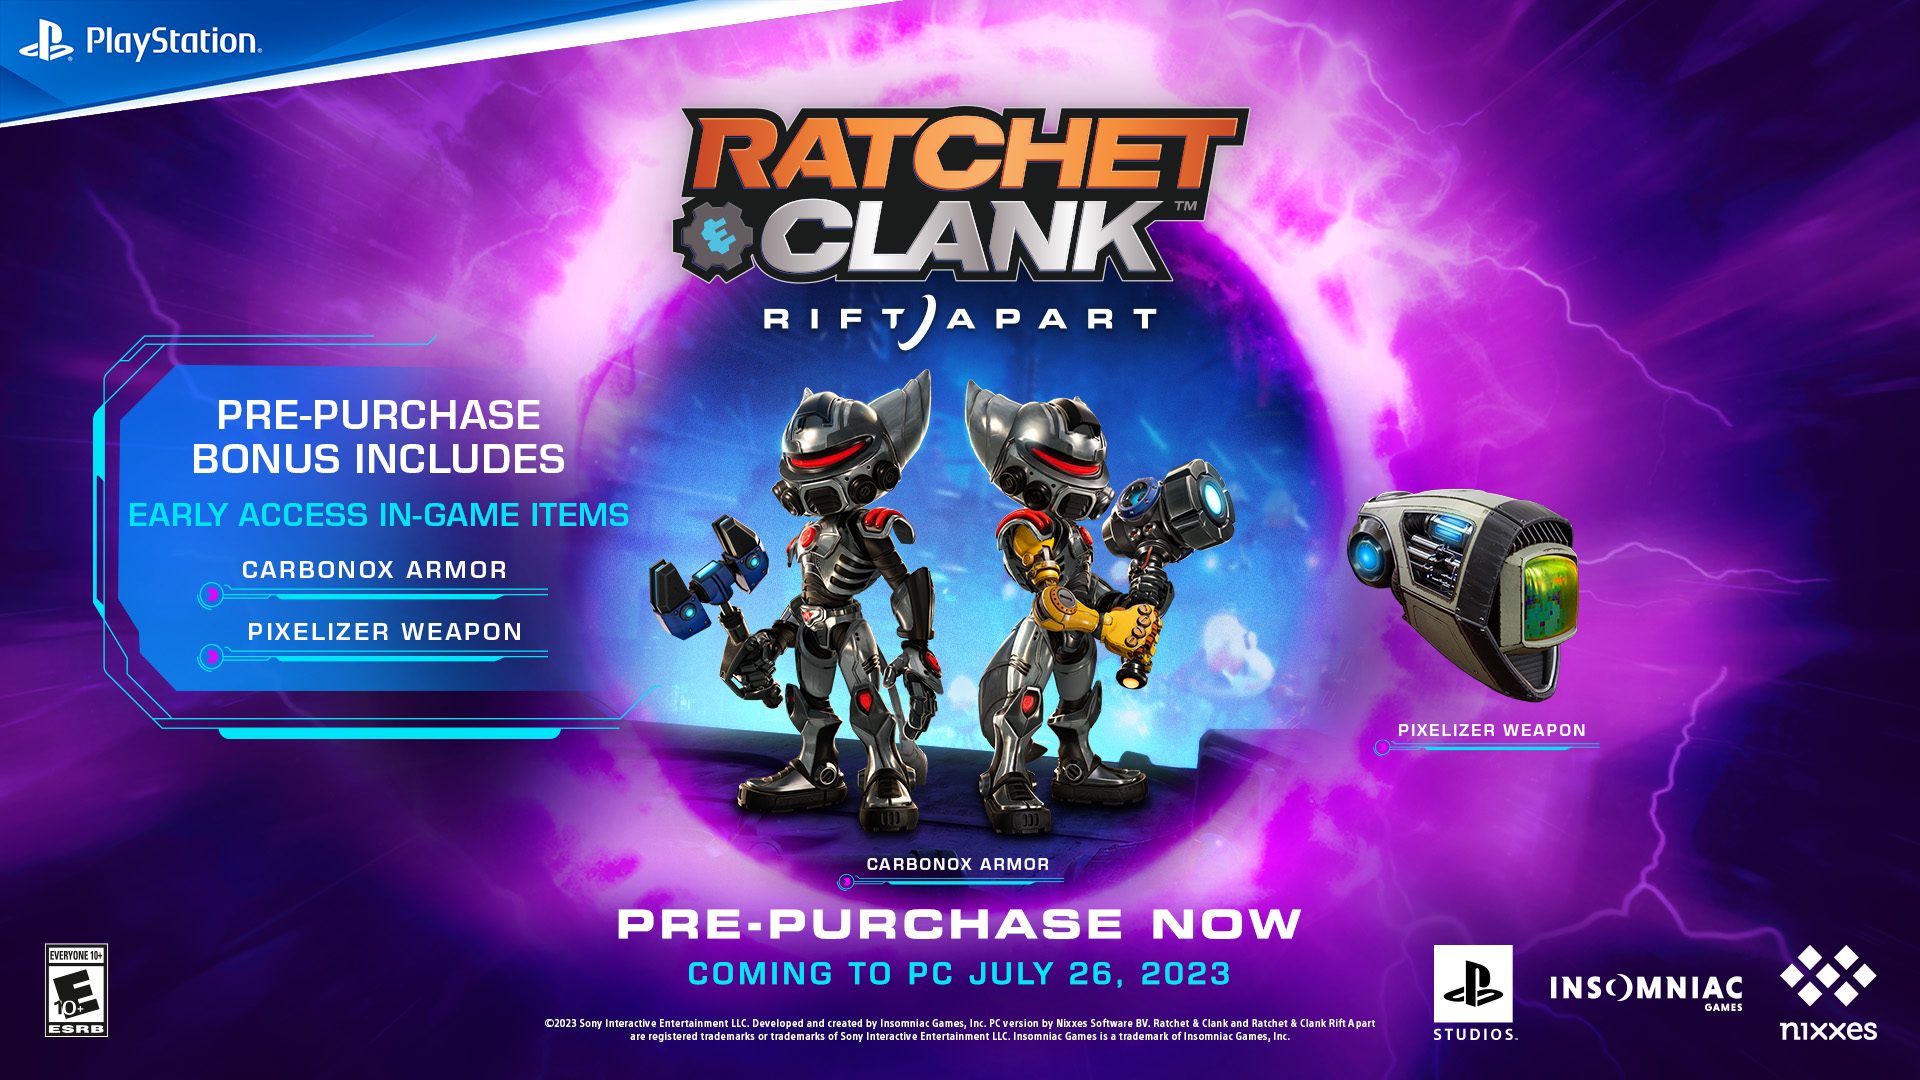 Ratchet Clank dimensión PC